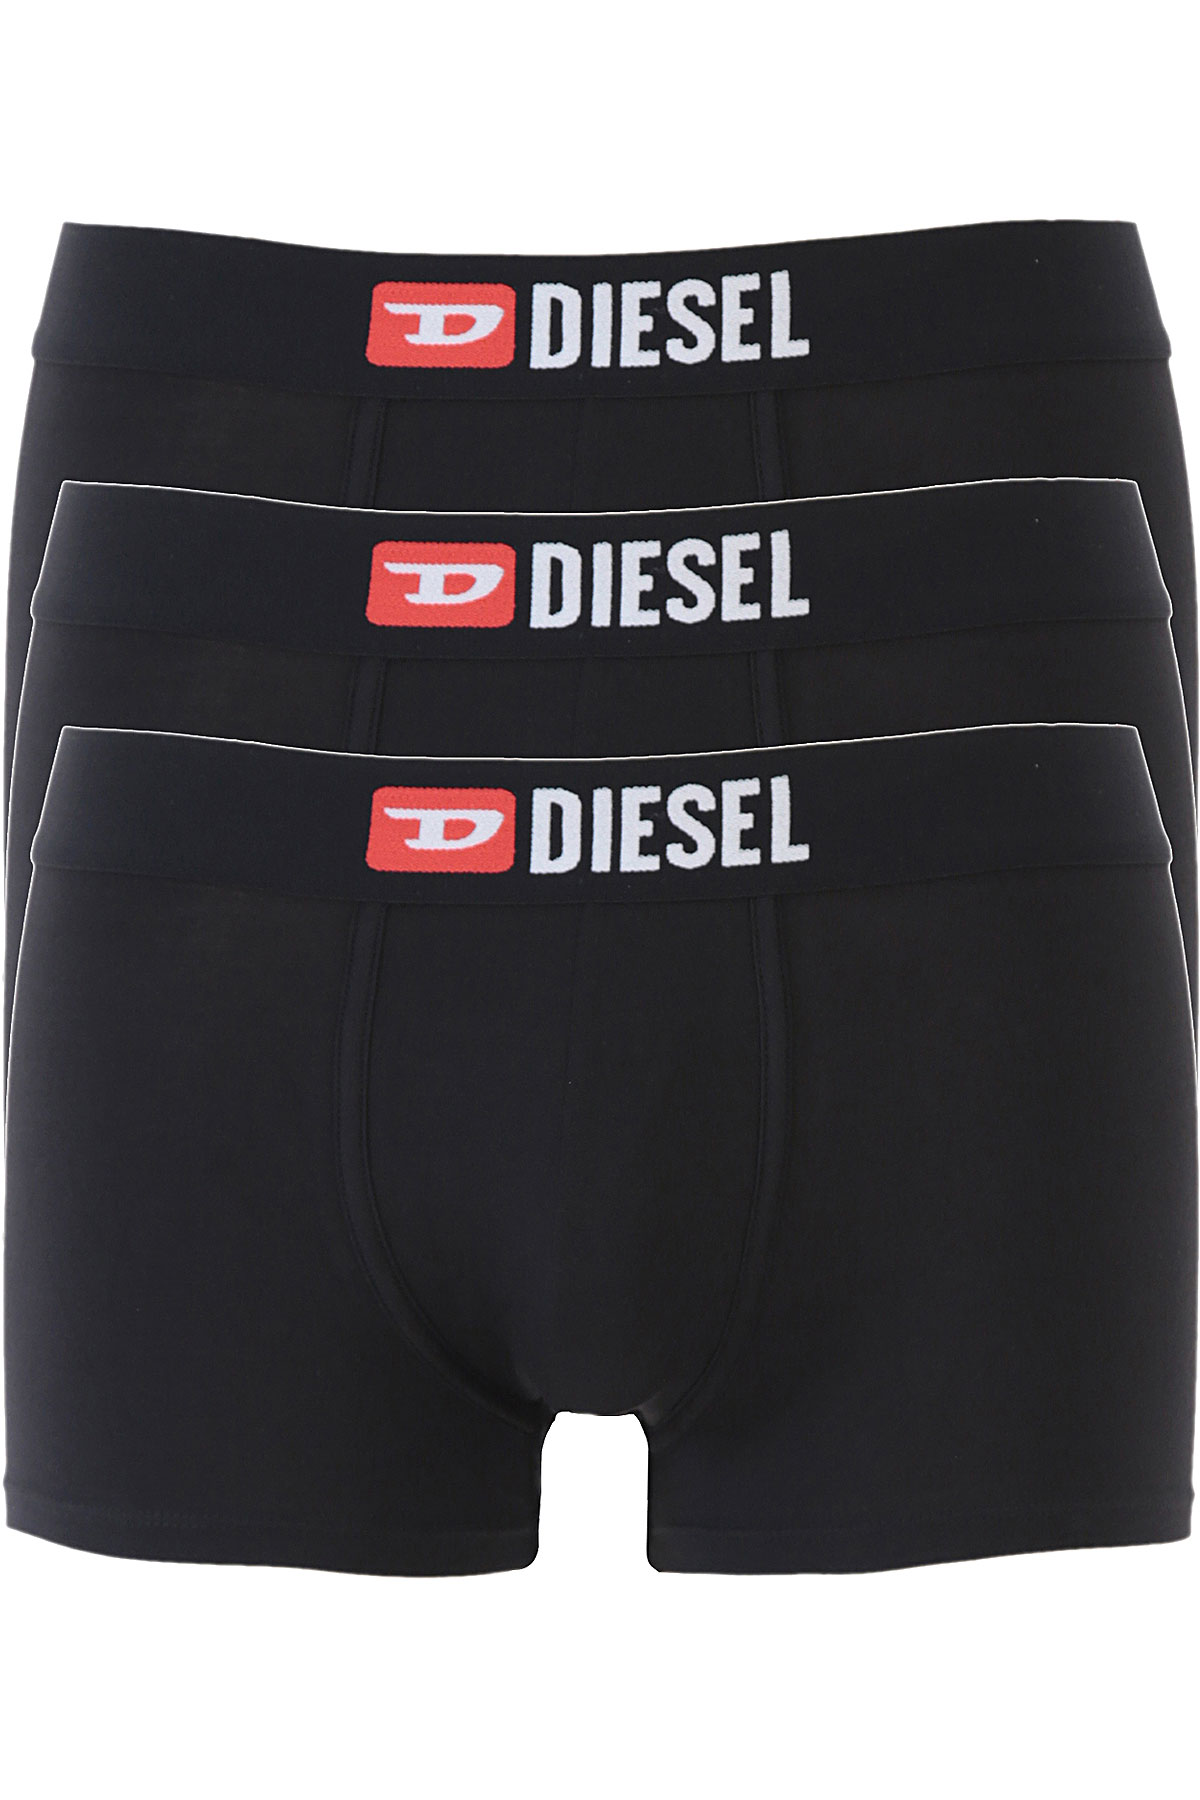 Mens Underwear Diesel, Style code: 00st3v-0wawd-e4101